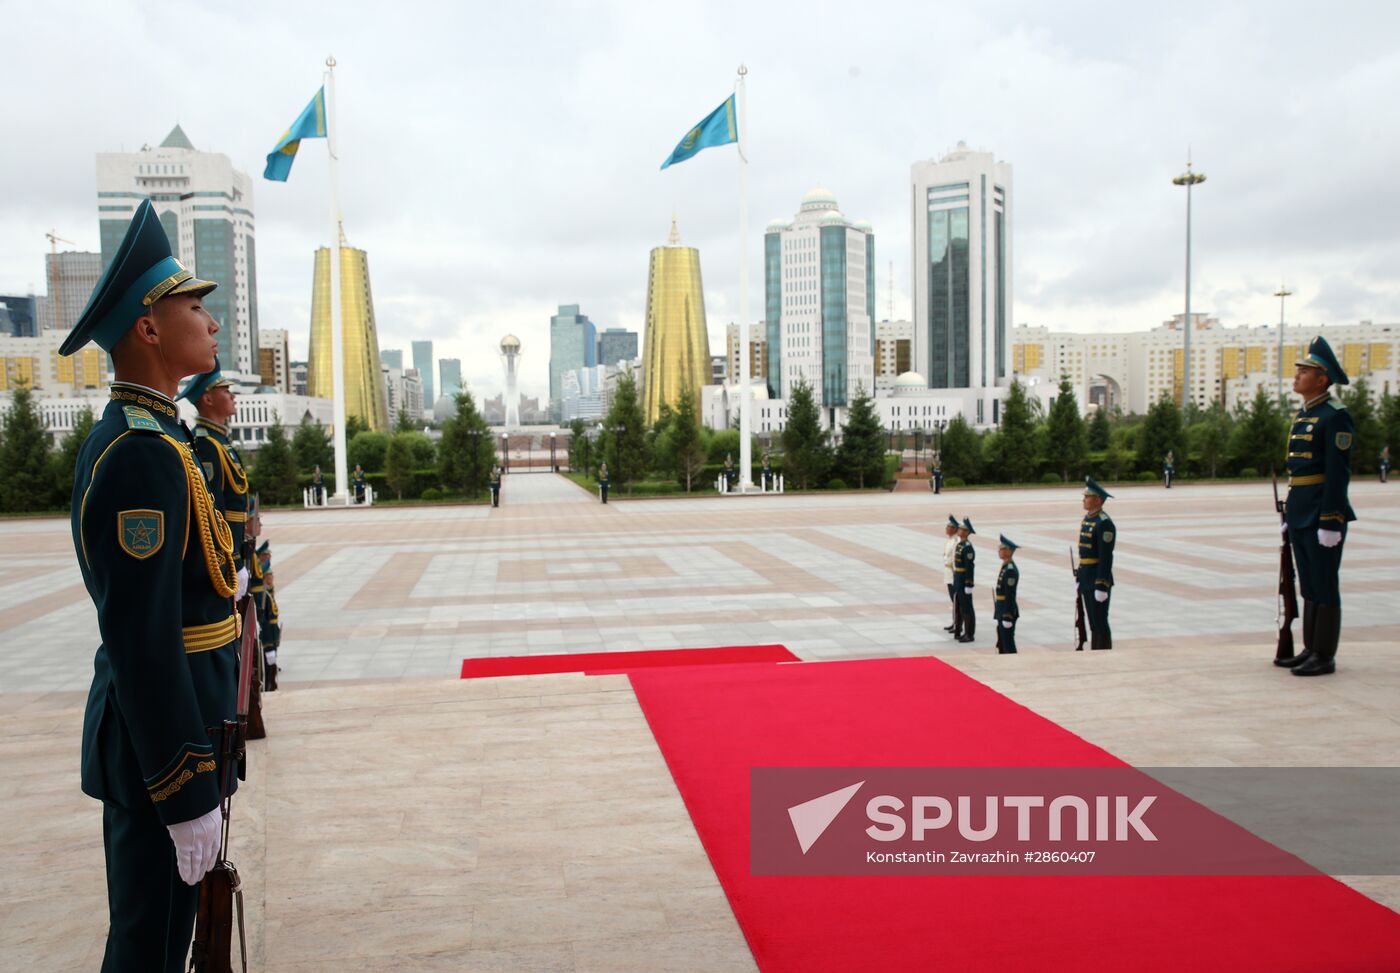 Russian President Vladimir Putin visits Kazakhstan